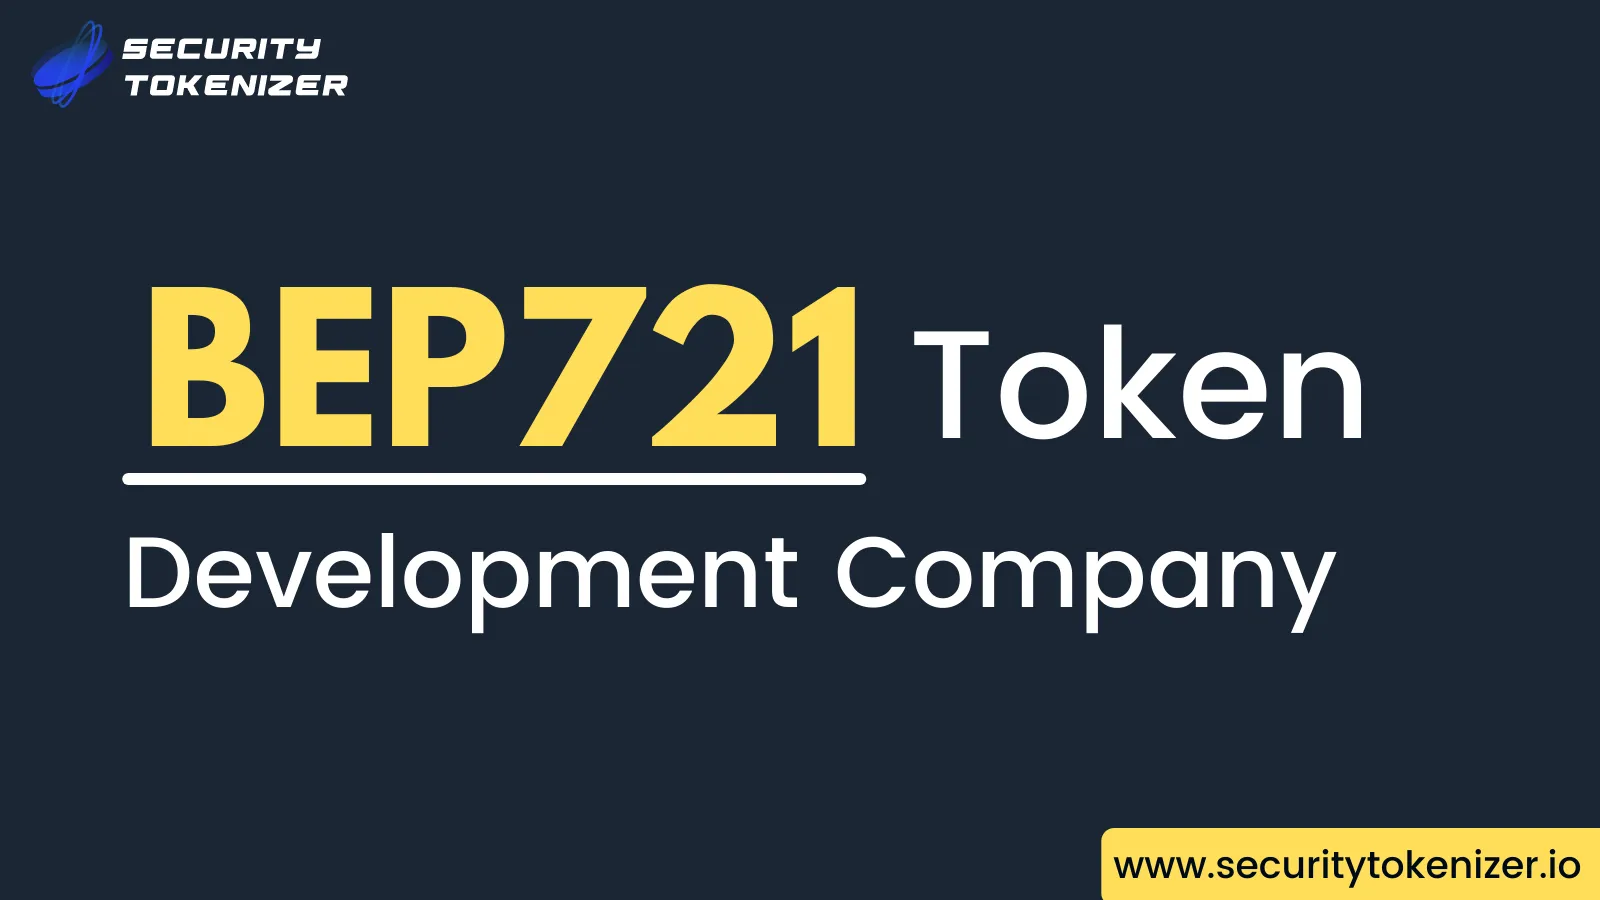 BEP721 Token Development Company - Security Tokenizer